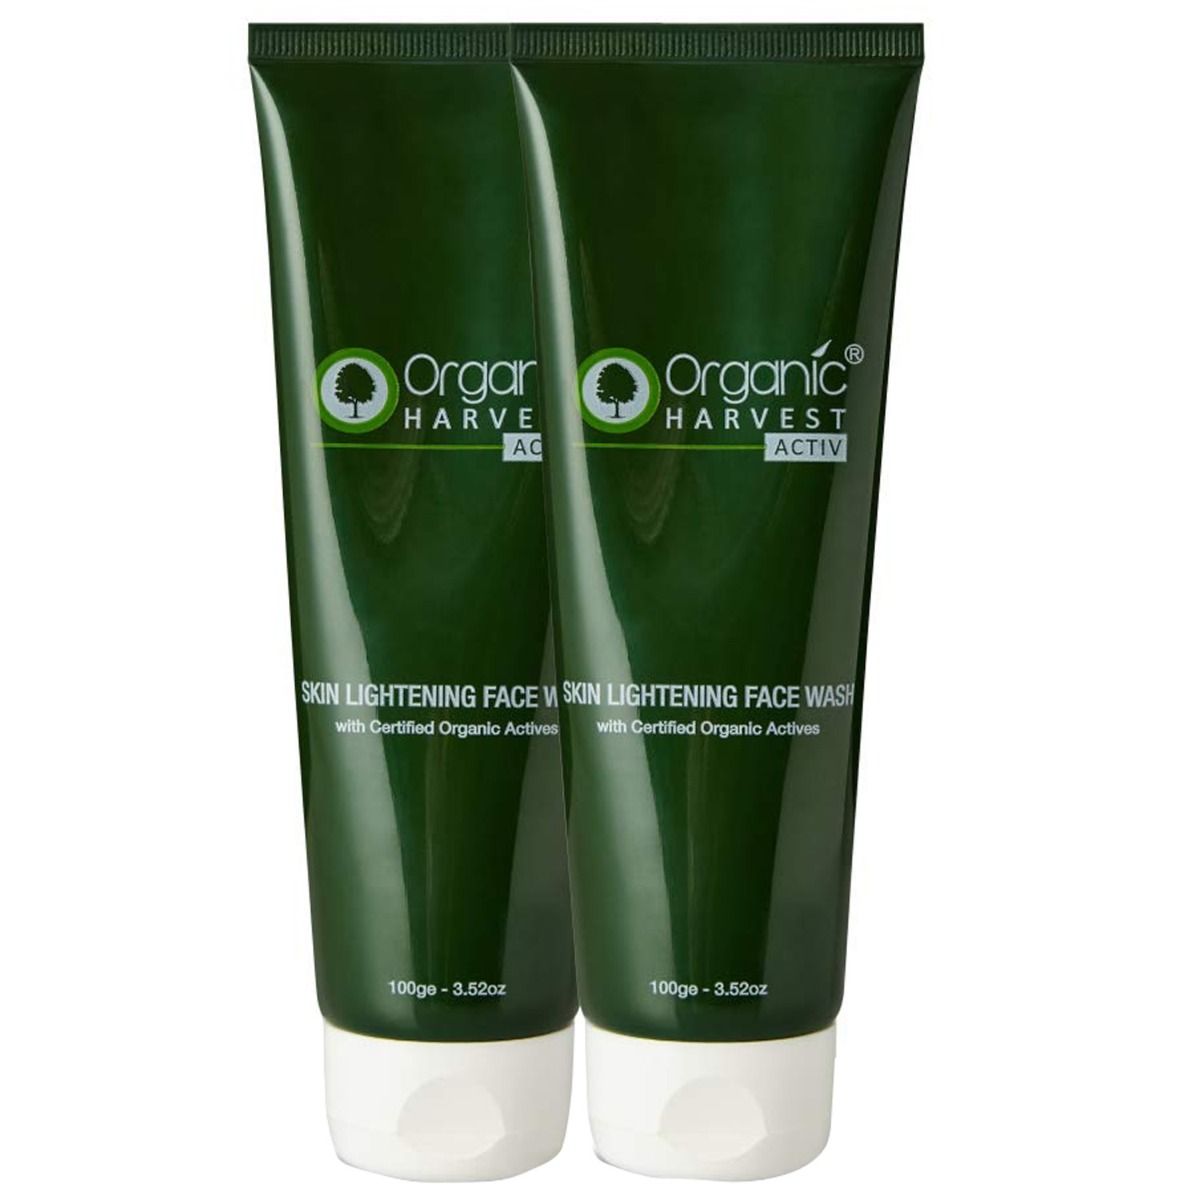 Buy Organic Harvest Activ Skin Lightening Face Wash, 100 gm Online